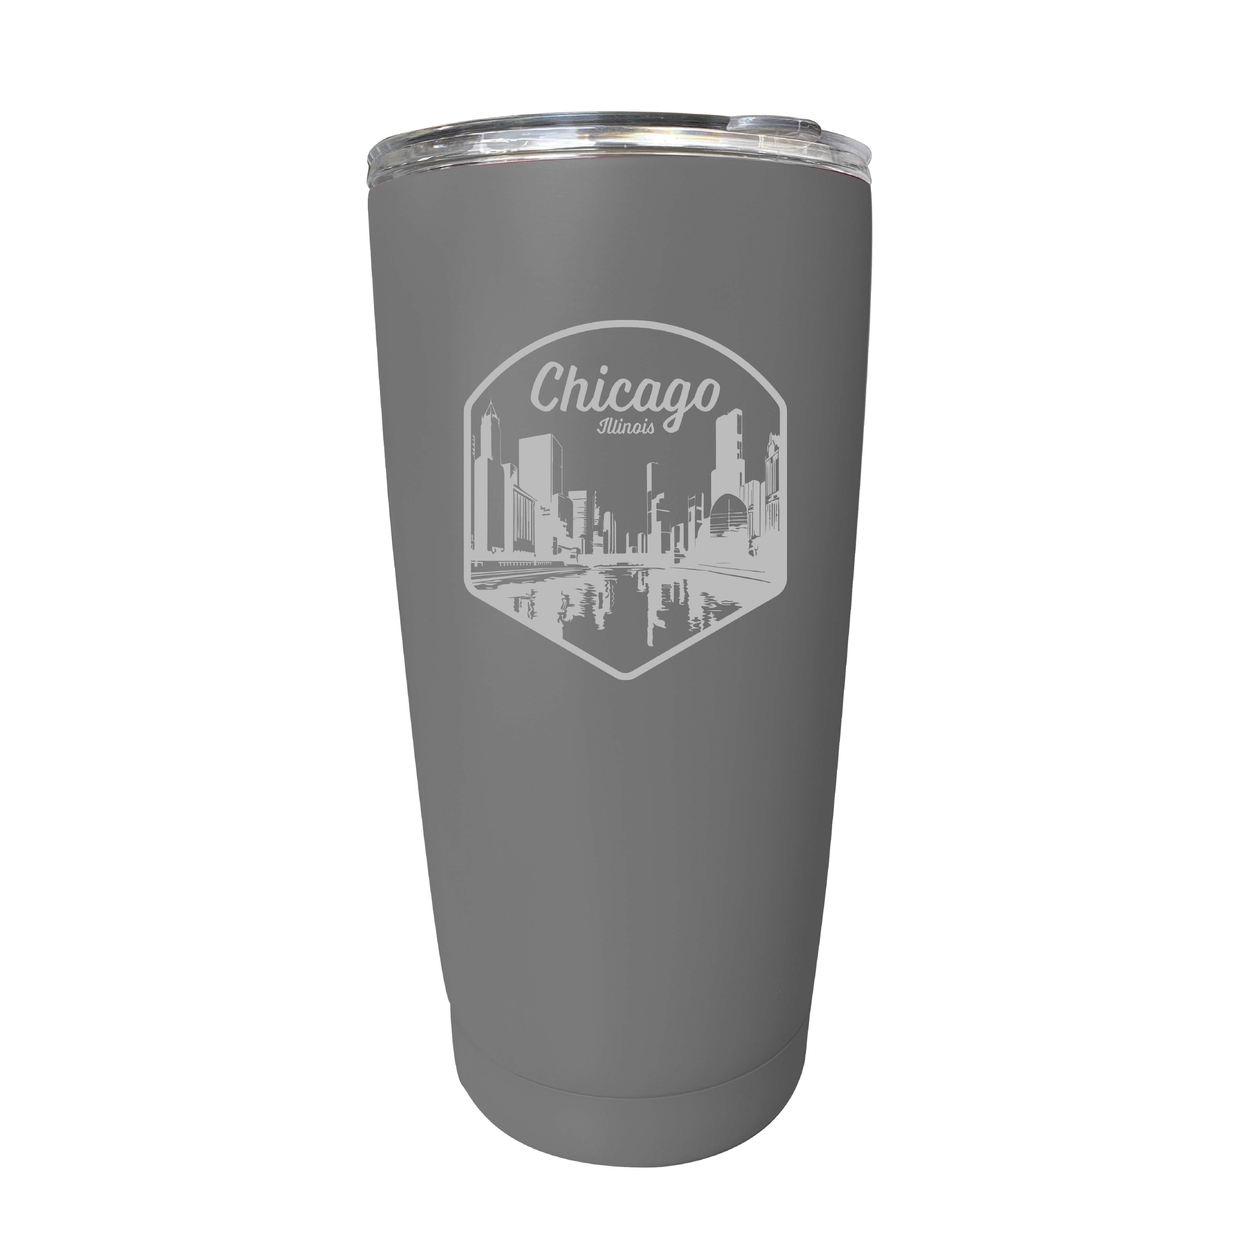 Chicago Illinois Souvenir 16 Oz Engraved Insulated Tumbler - Gray,,4-Pack